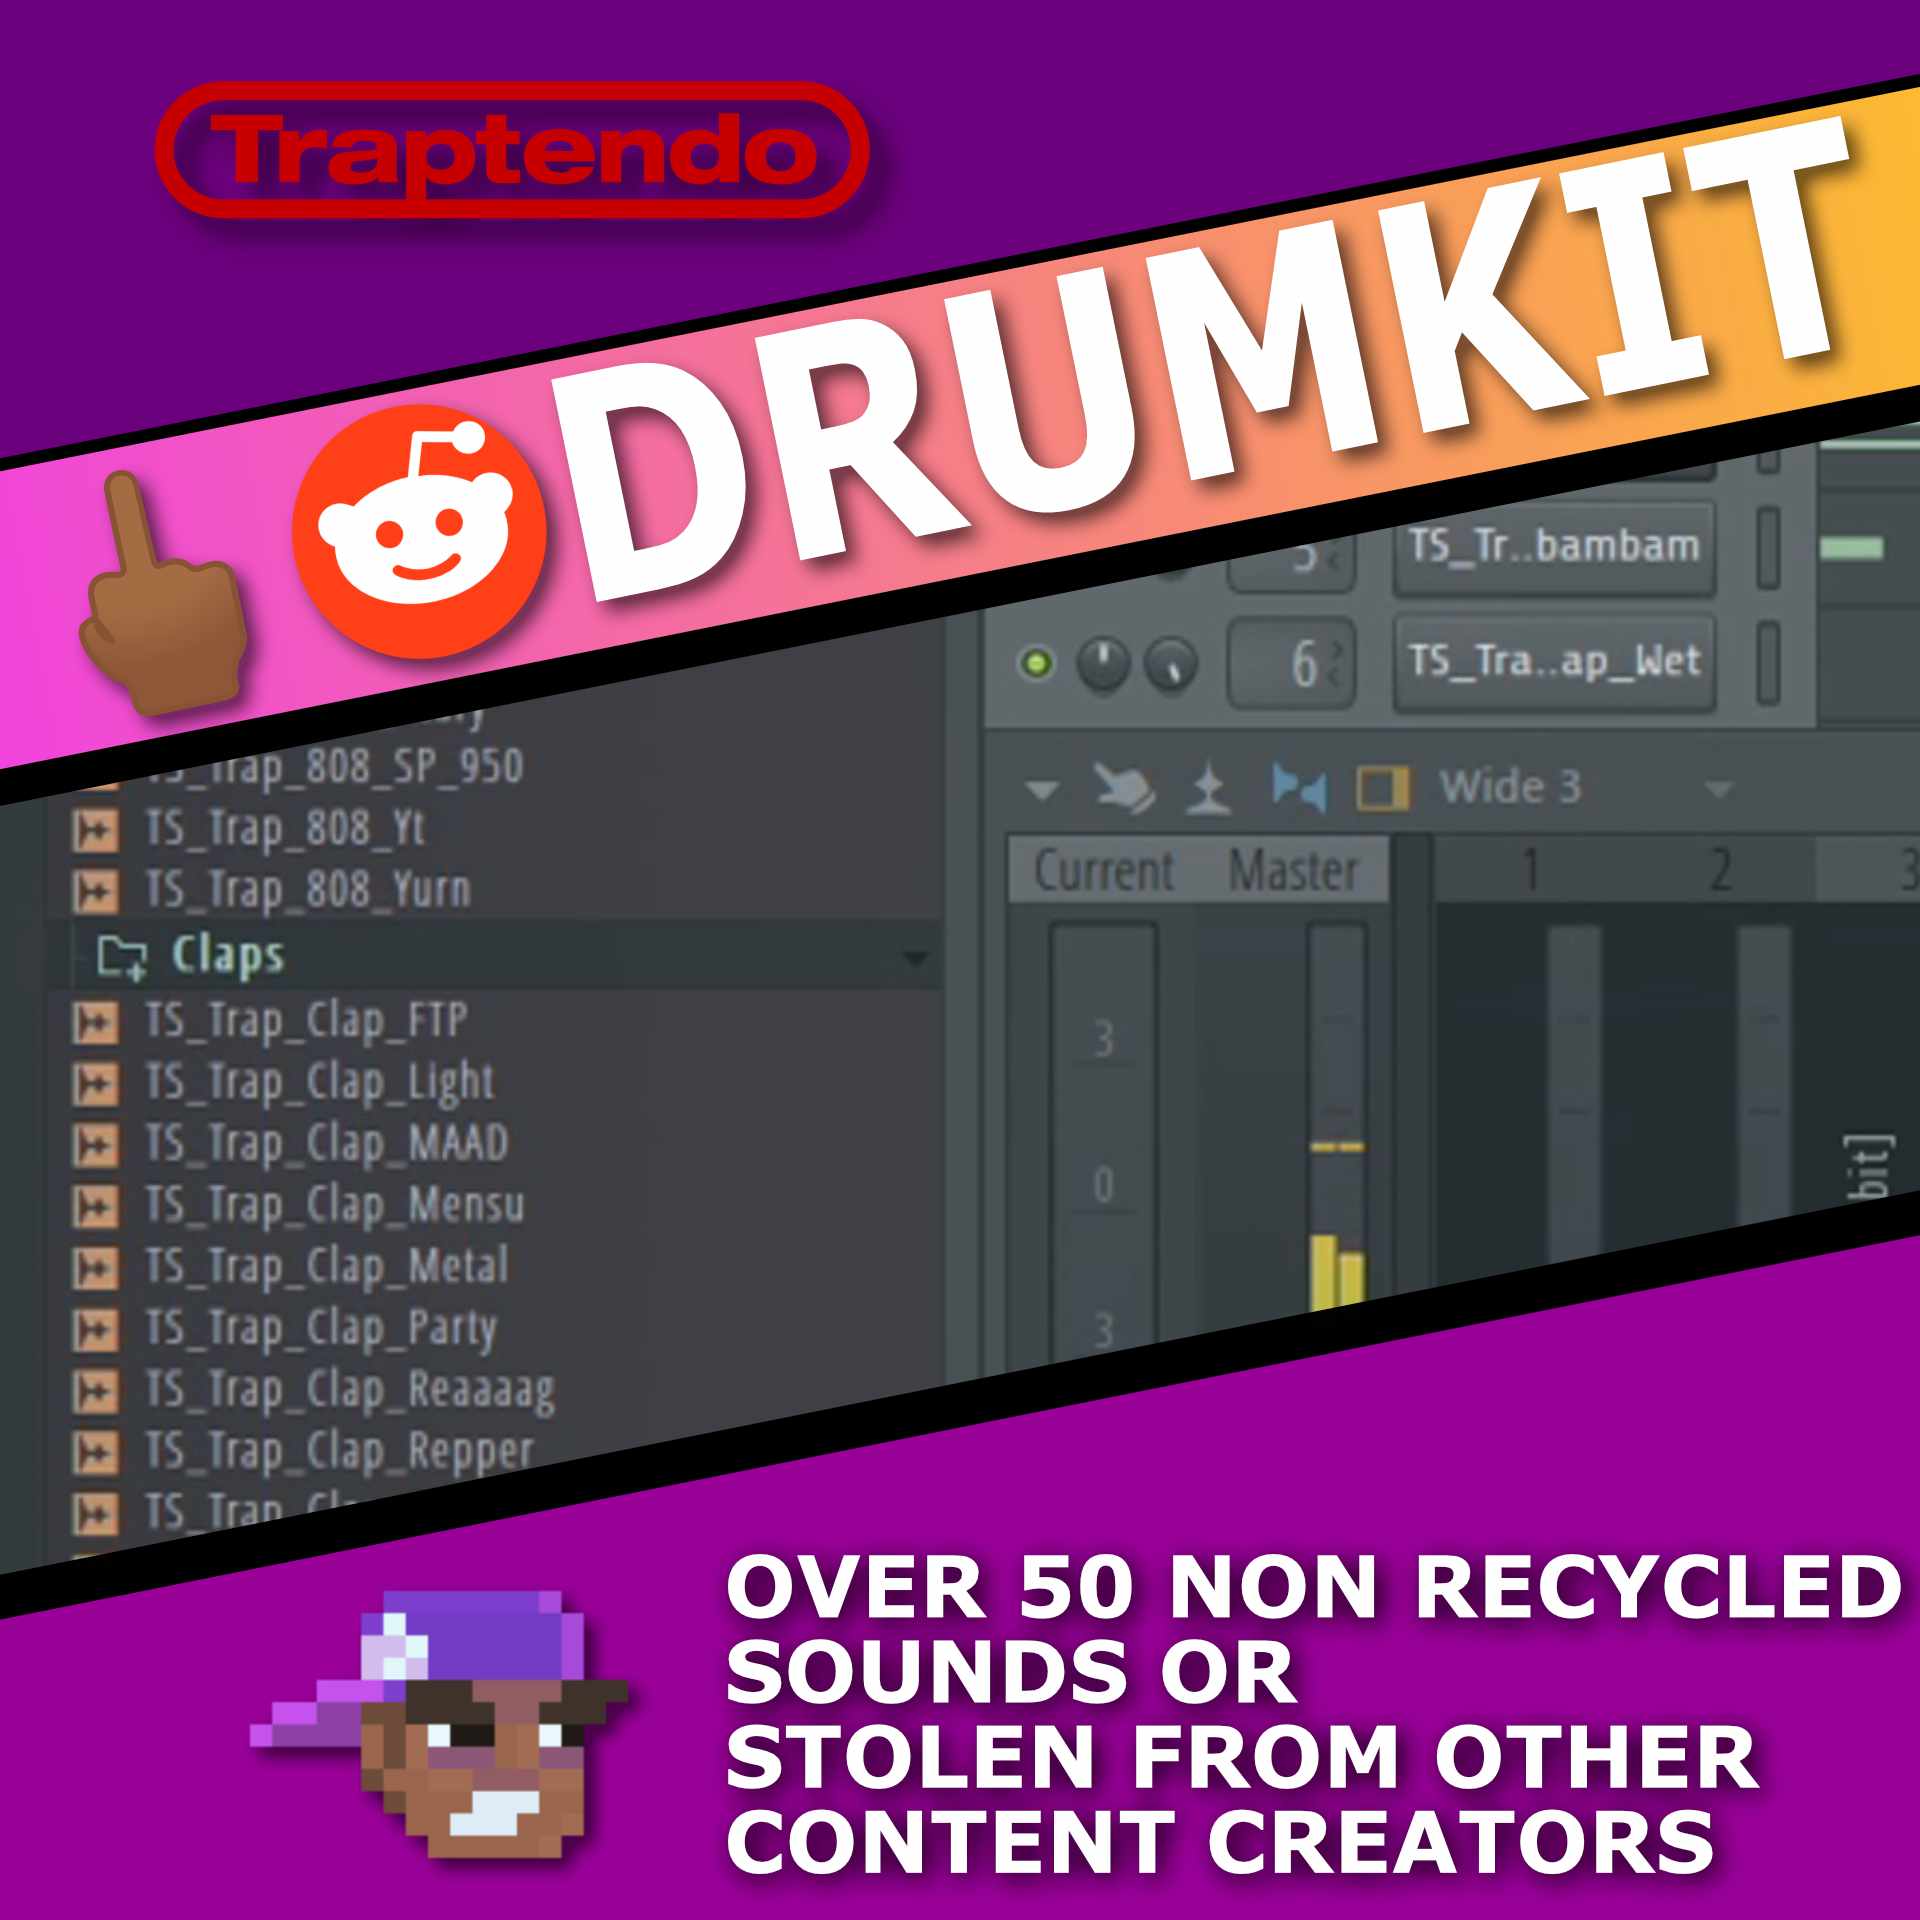 johnny juliano drum kit reddit cracked